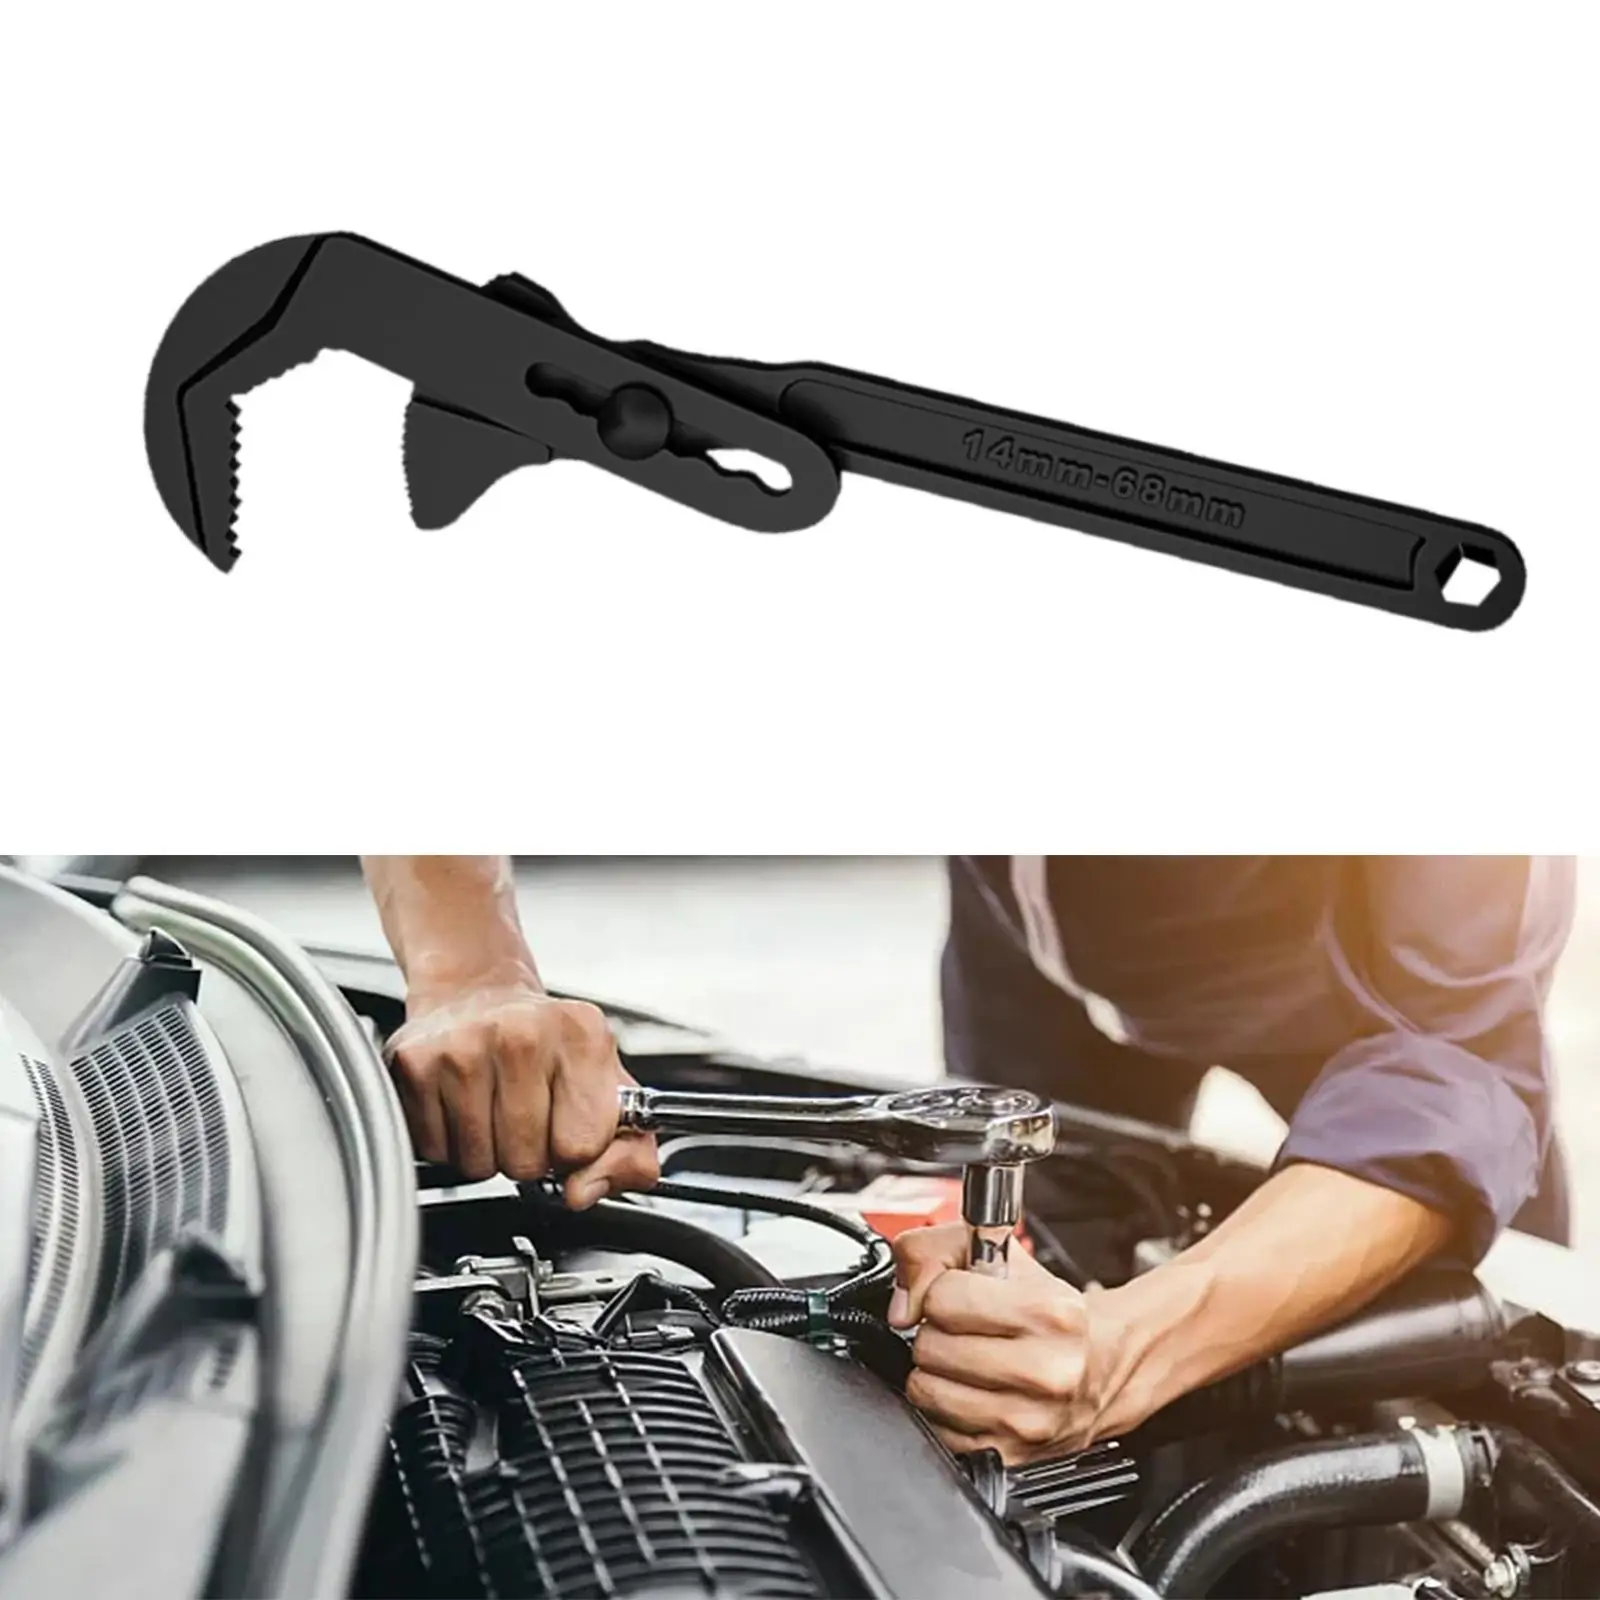 

Multipurpose Wrench Spanner Tools for Car Repairing Home Maintenance Tube